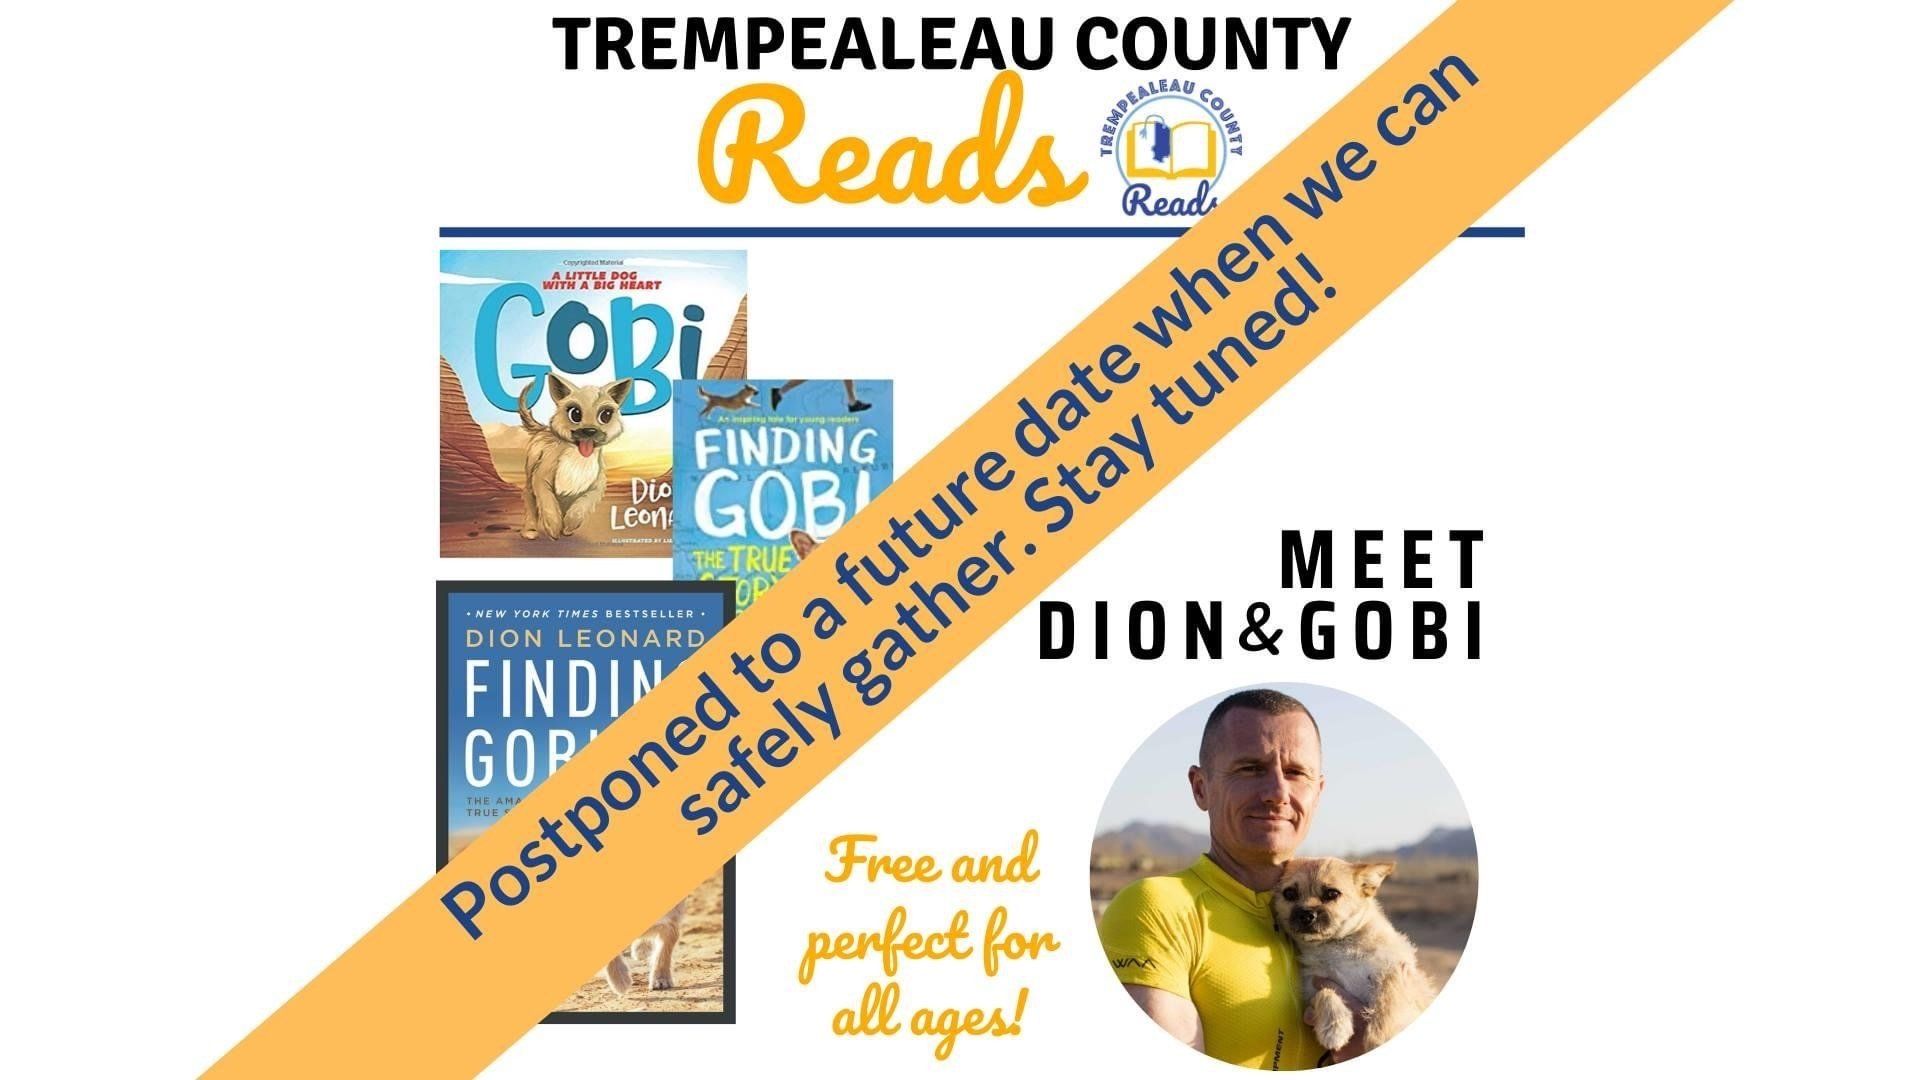 Trempealeau County Reads, Finding Gobi, Dion Leonard